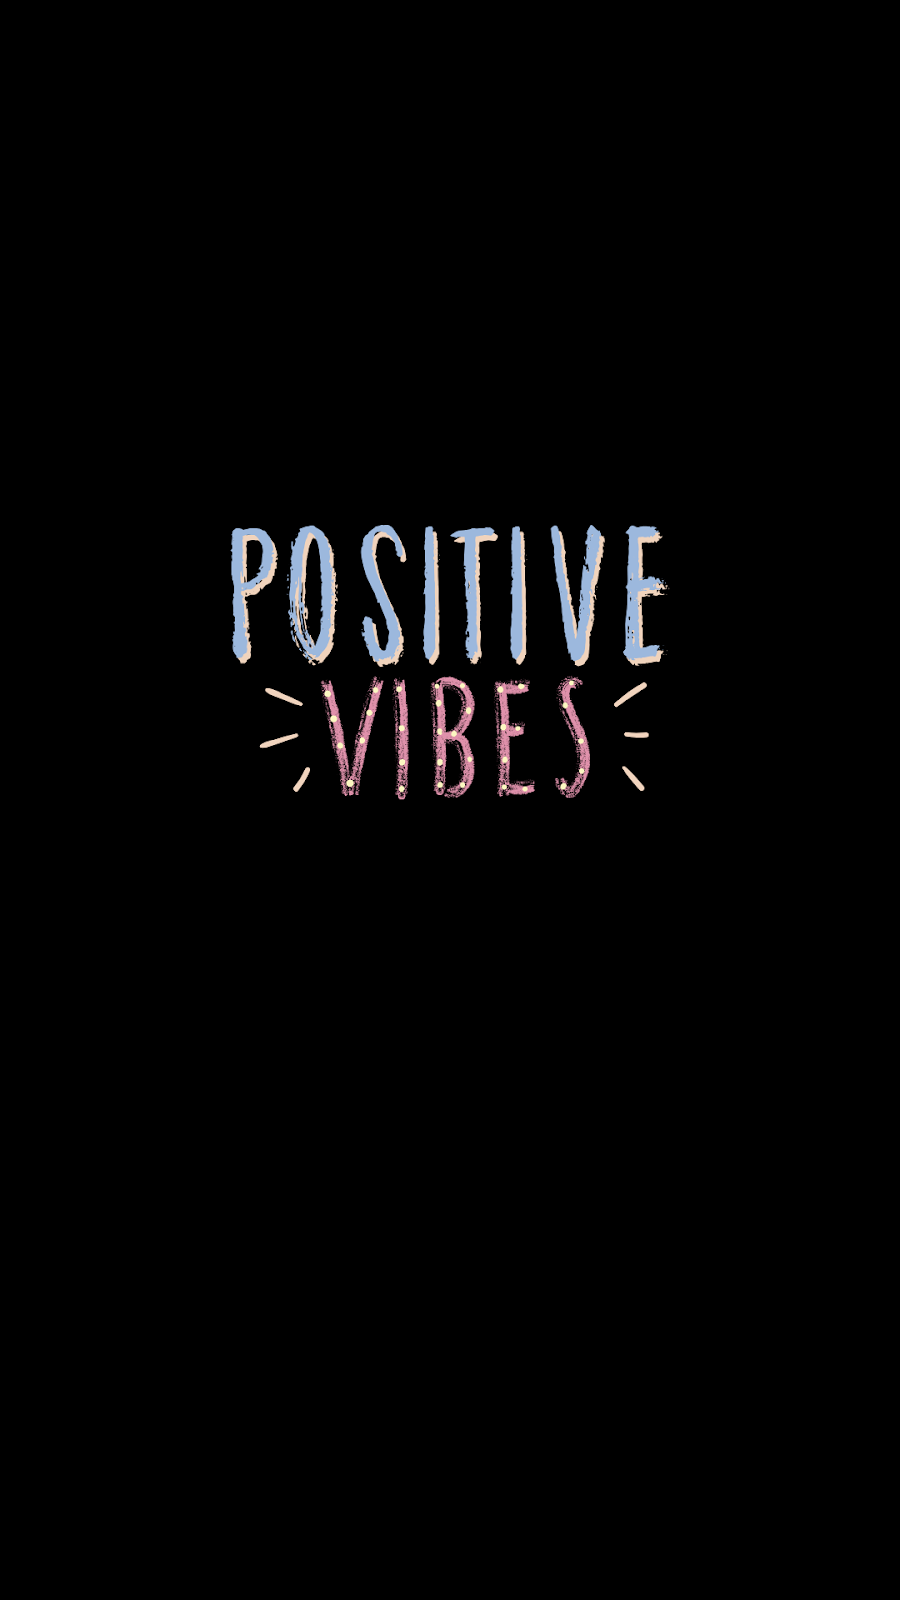 30k Positive Vibe Pictures  Download Free Images on Unsplash